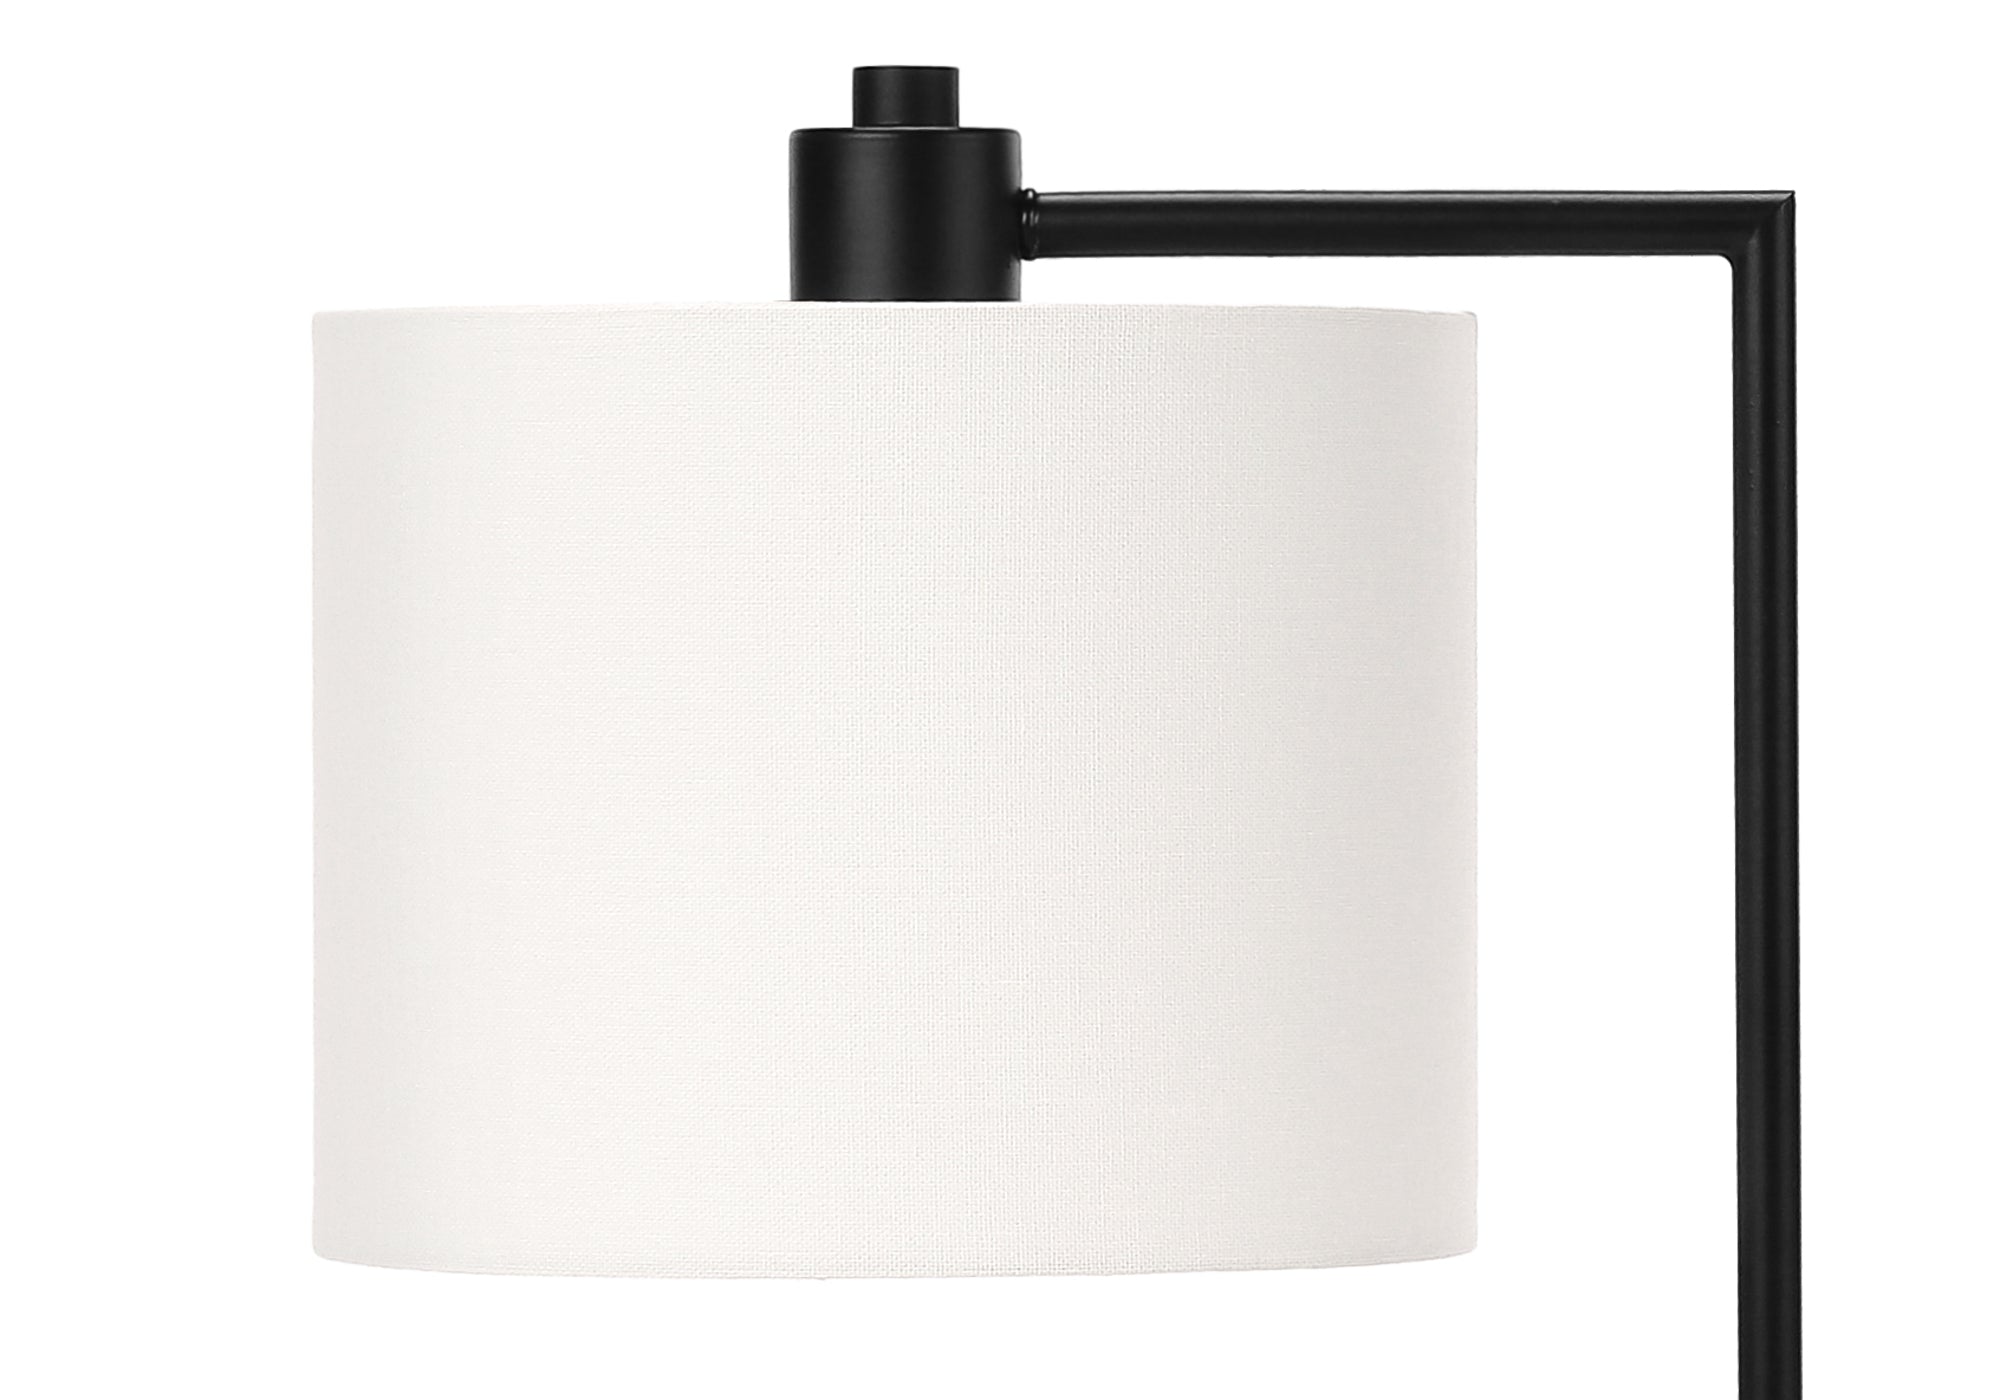 MN-259646    Lighting, 19"H, Table Lamp, Usb Port Included, Black Metal, Ivory / Cream Shade, Modern